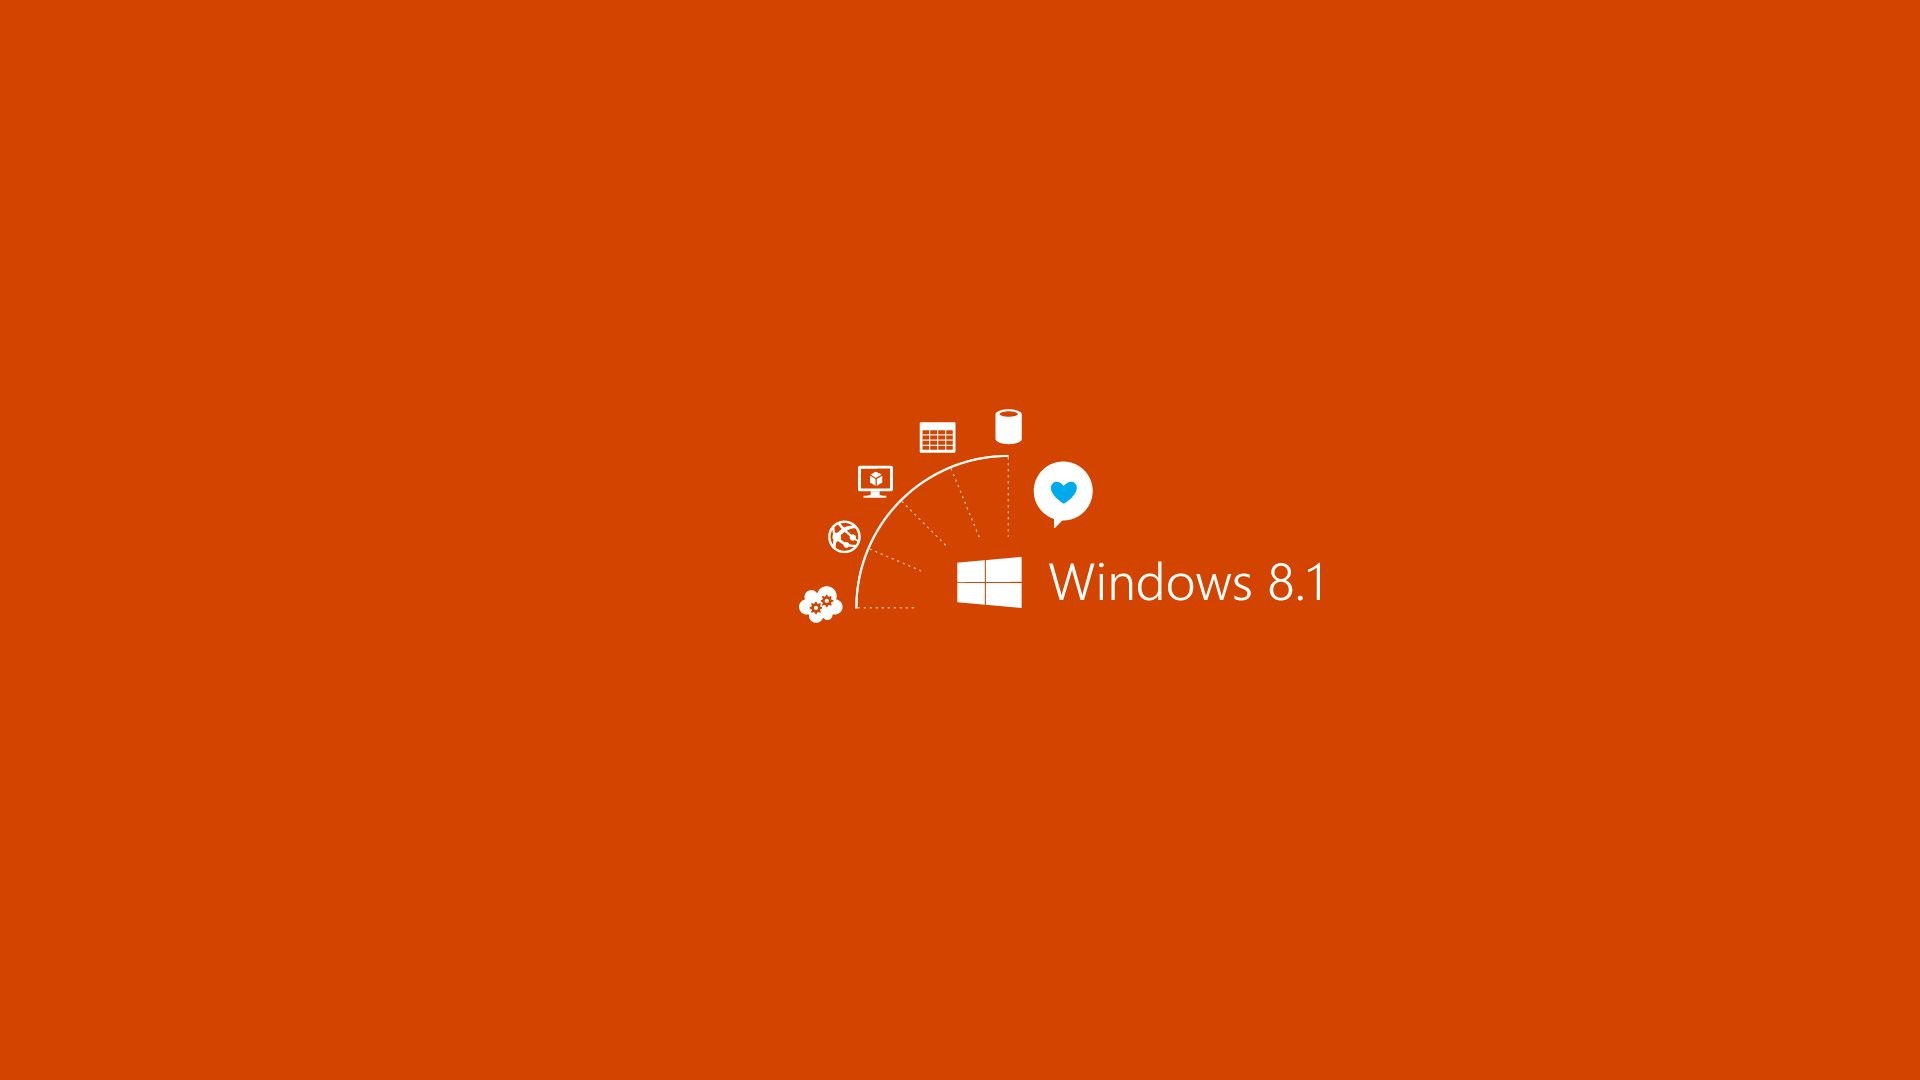 Px Windows 8.1 Live HD Windows 8.1 Wallpapers, Photos